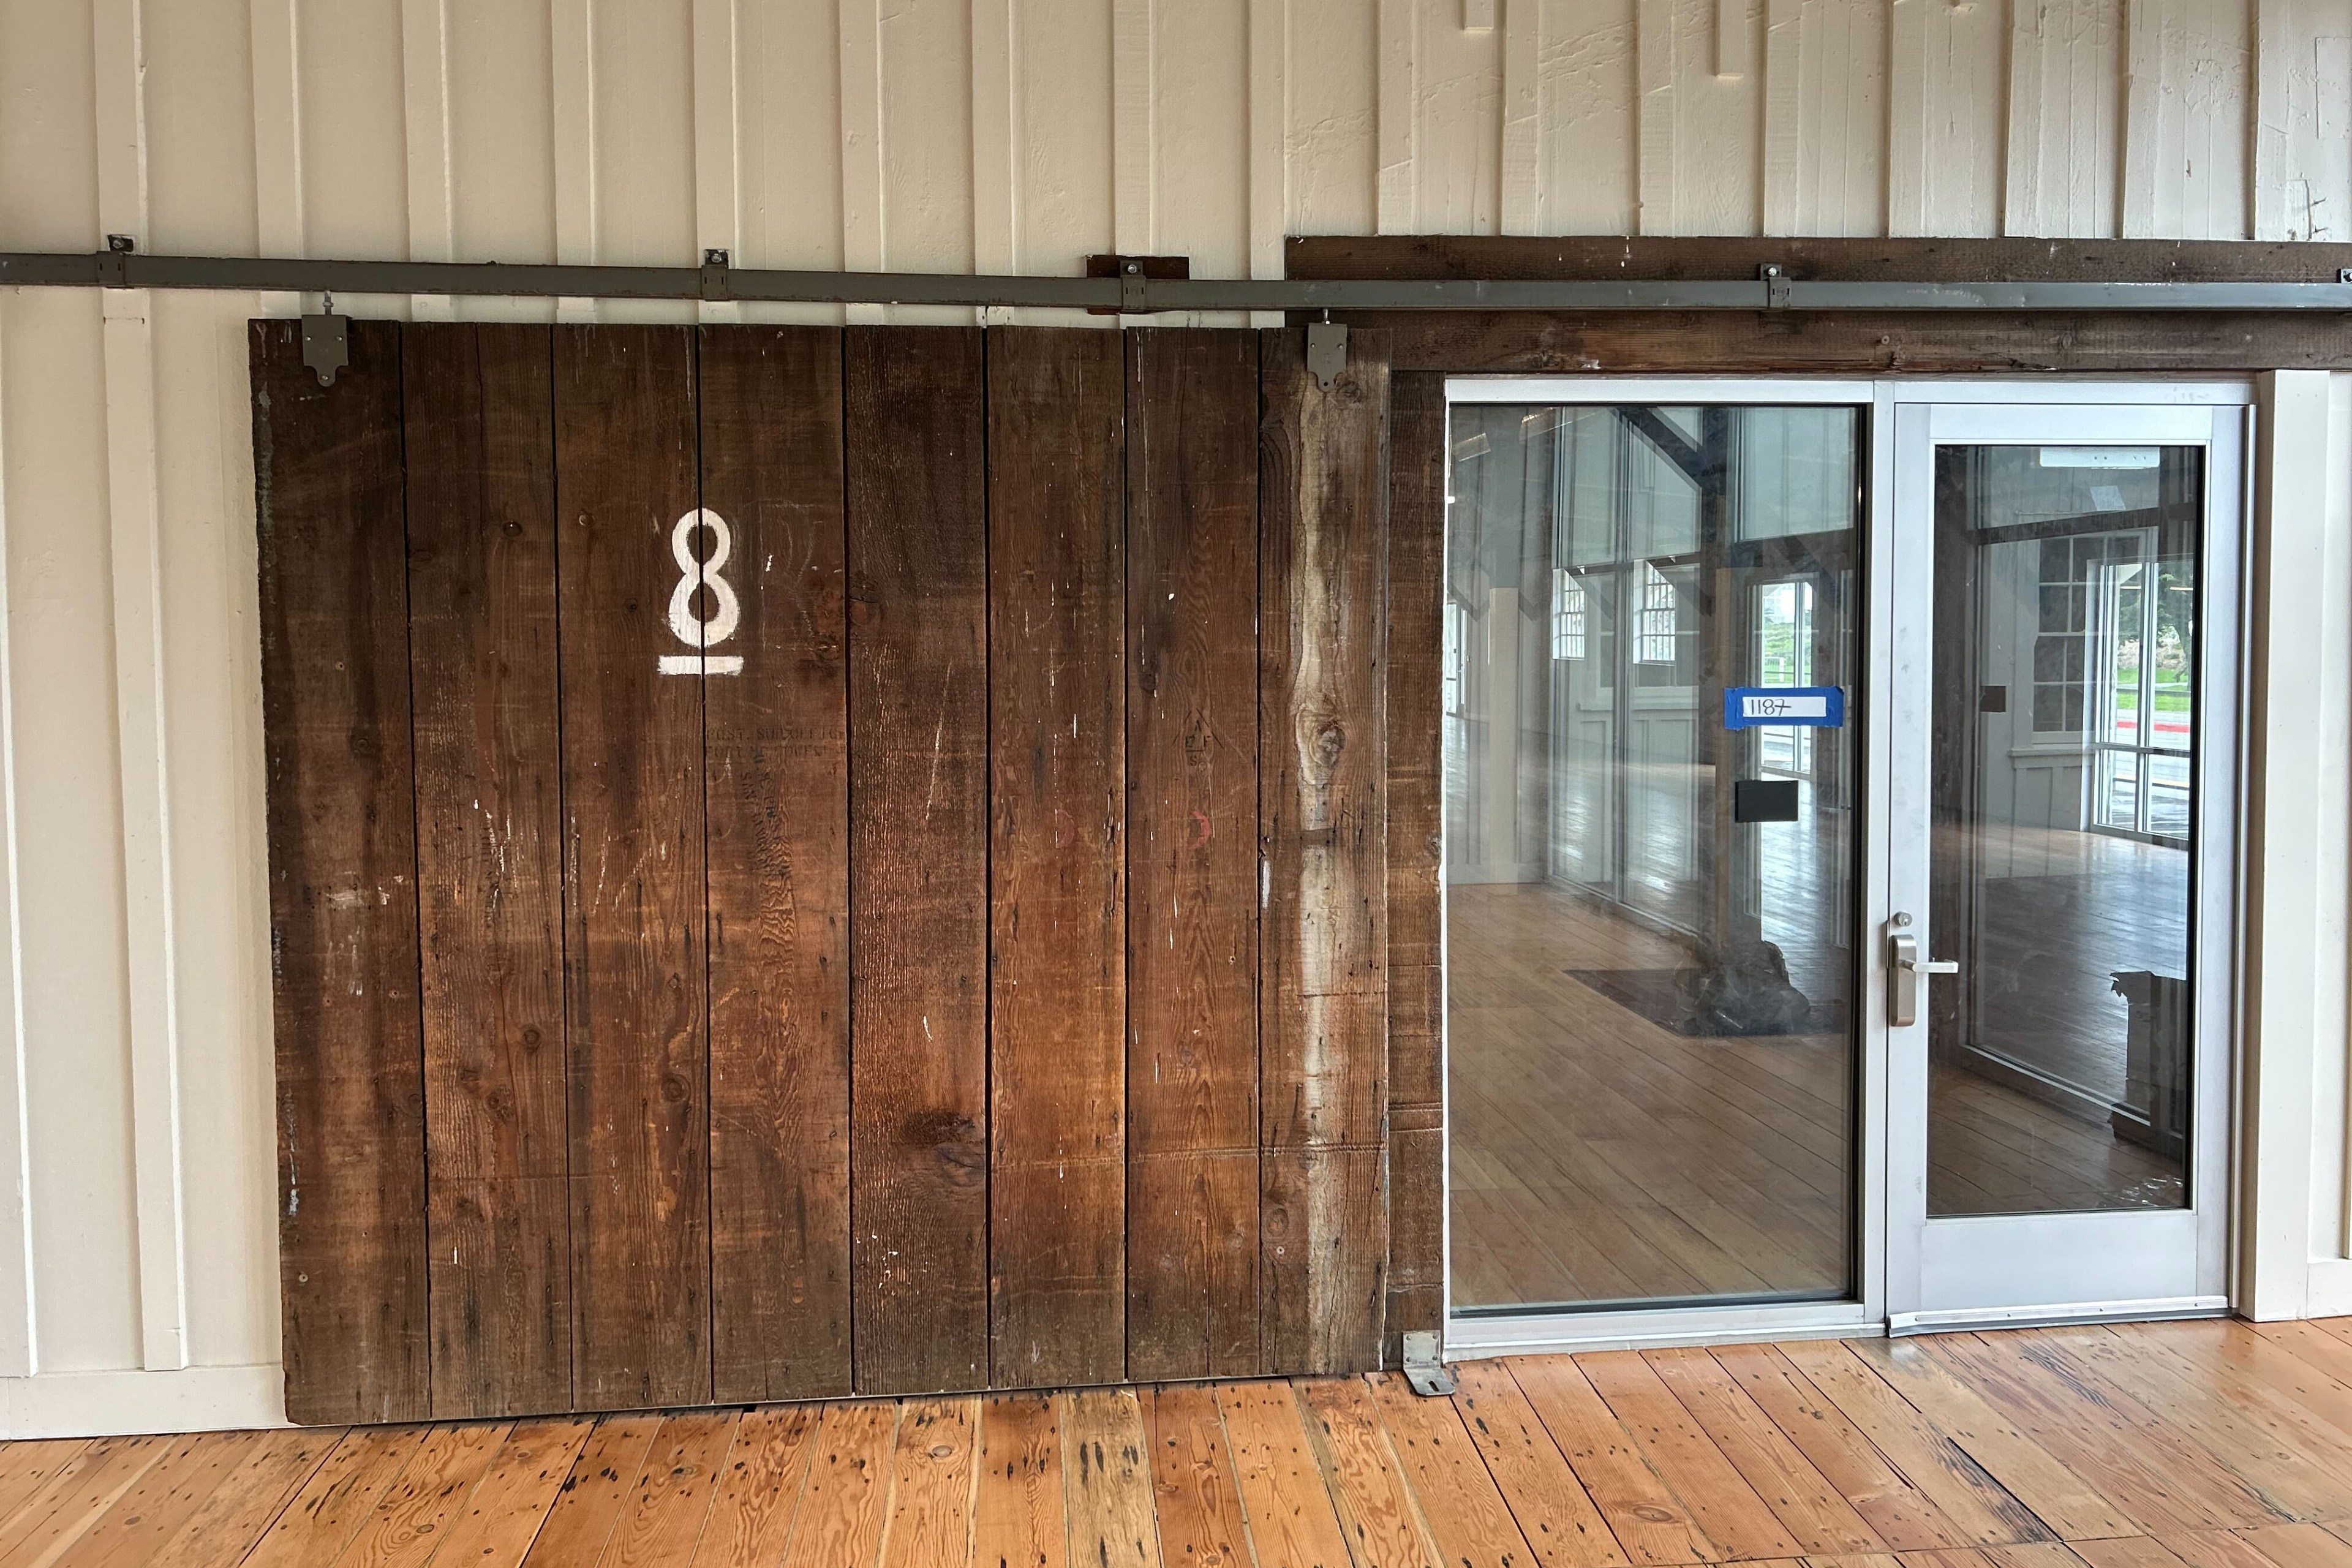 A rustic wooden sliding barn door next to modern glass doors inside a room with wooden floors.